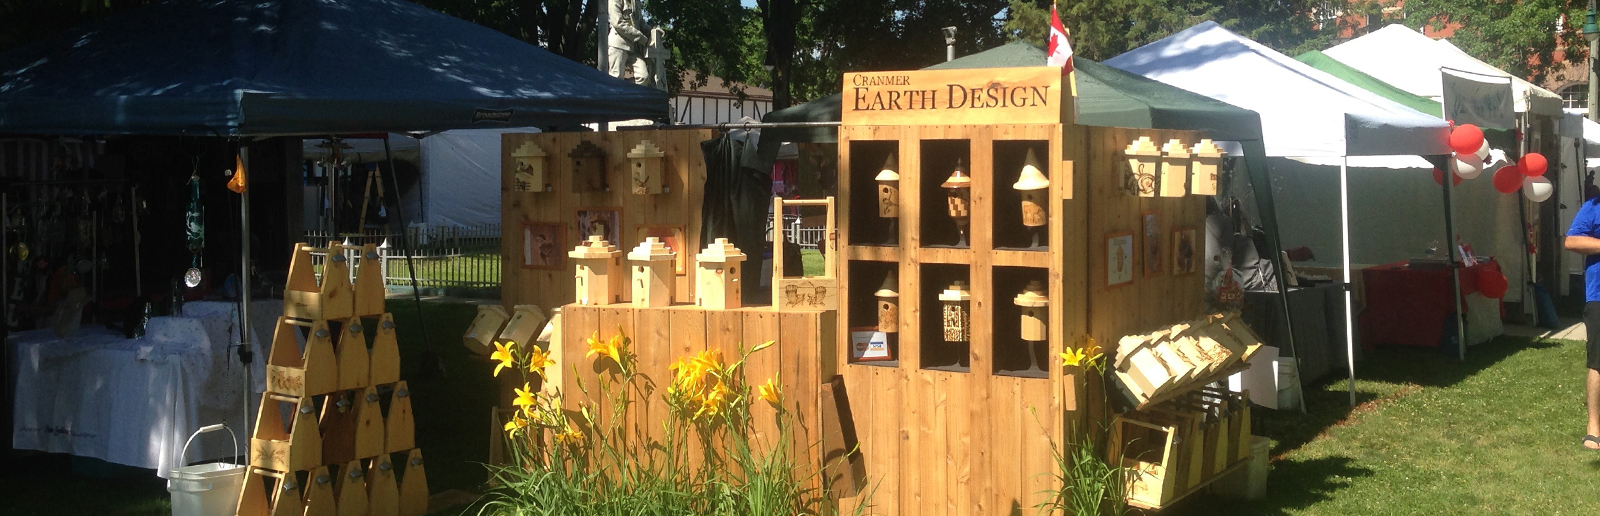 Cranmer Earth Design at Petrolia Art in the Park